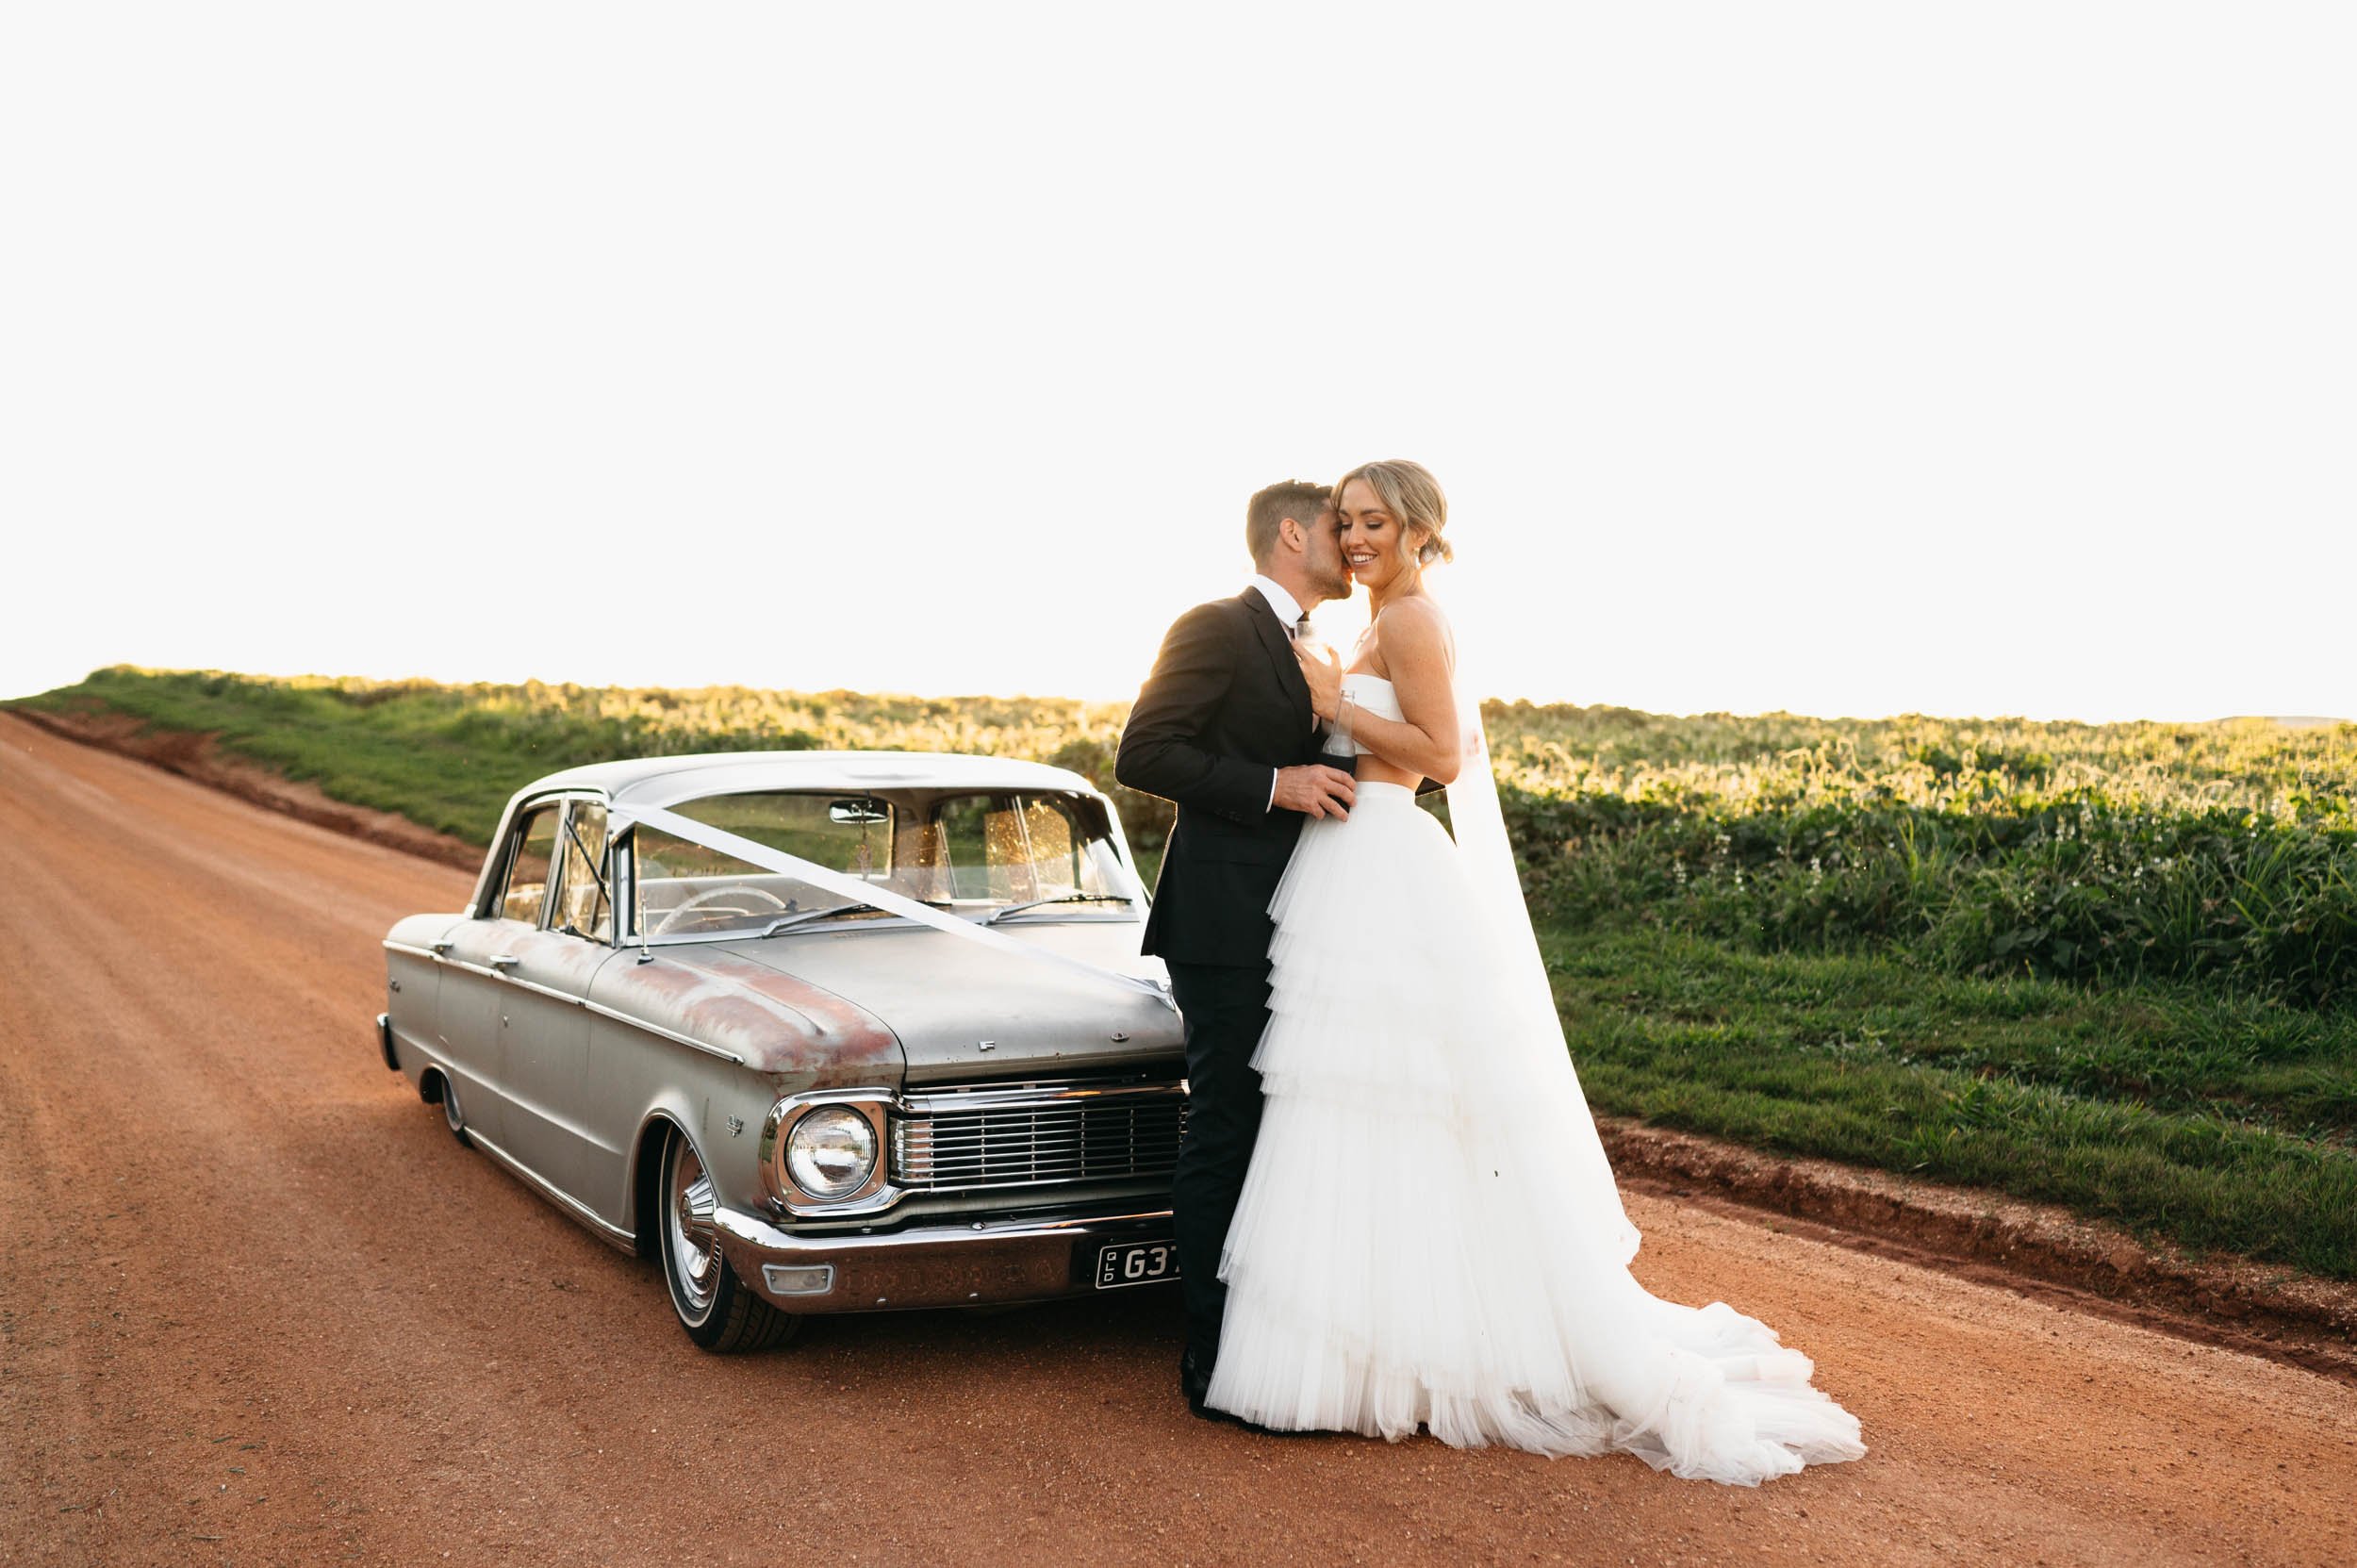 The Raw Photographer - Cairns Wedding Photographer - Mareeba Tablelands - Queensland photography - Kyha dress - luxury-54.jpg